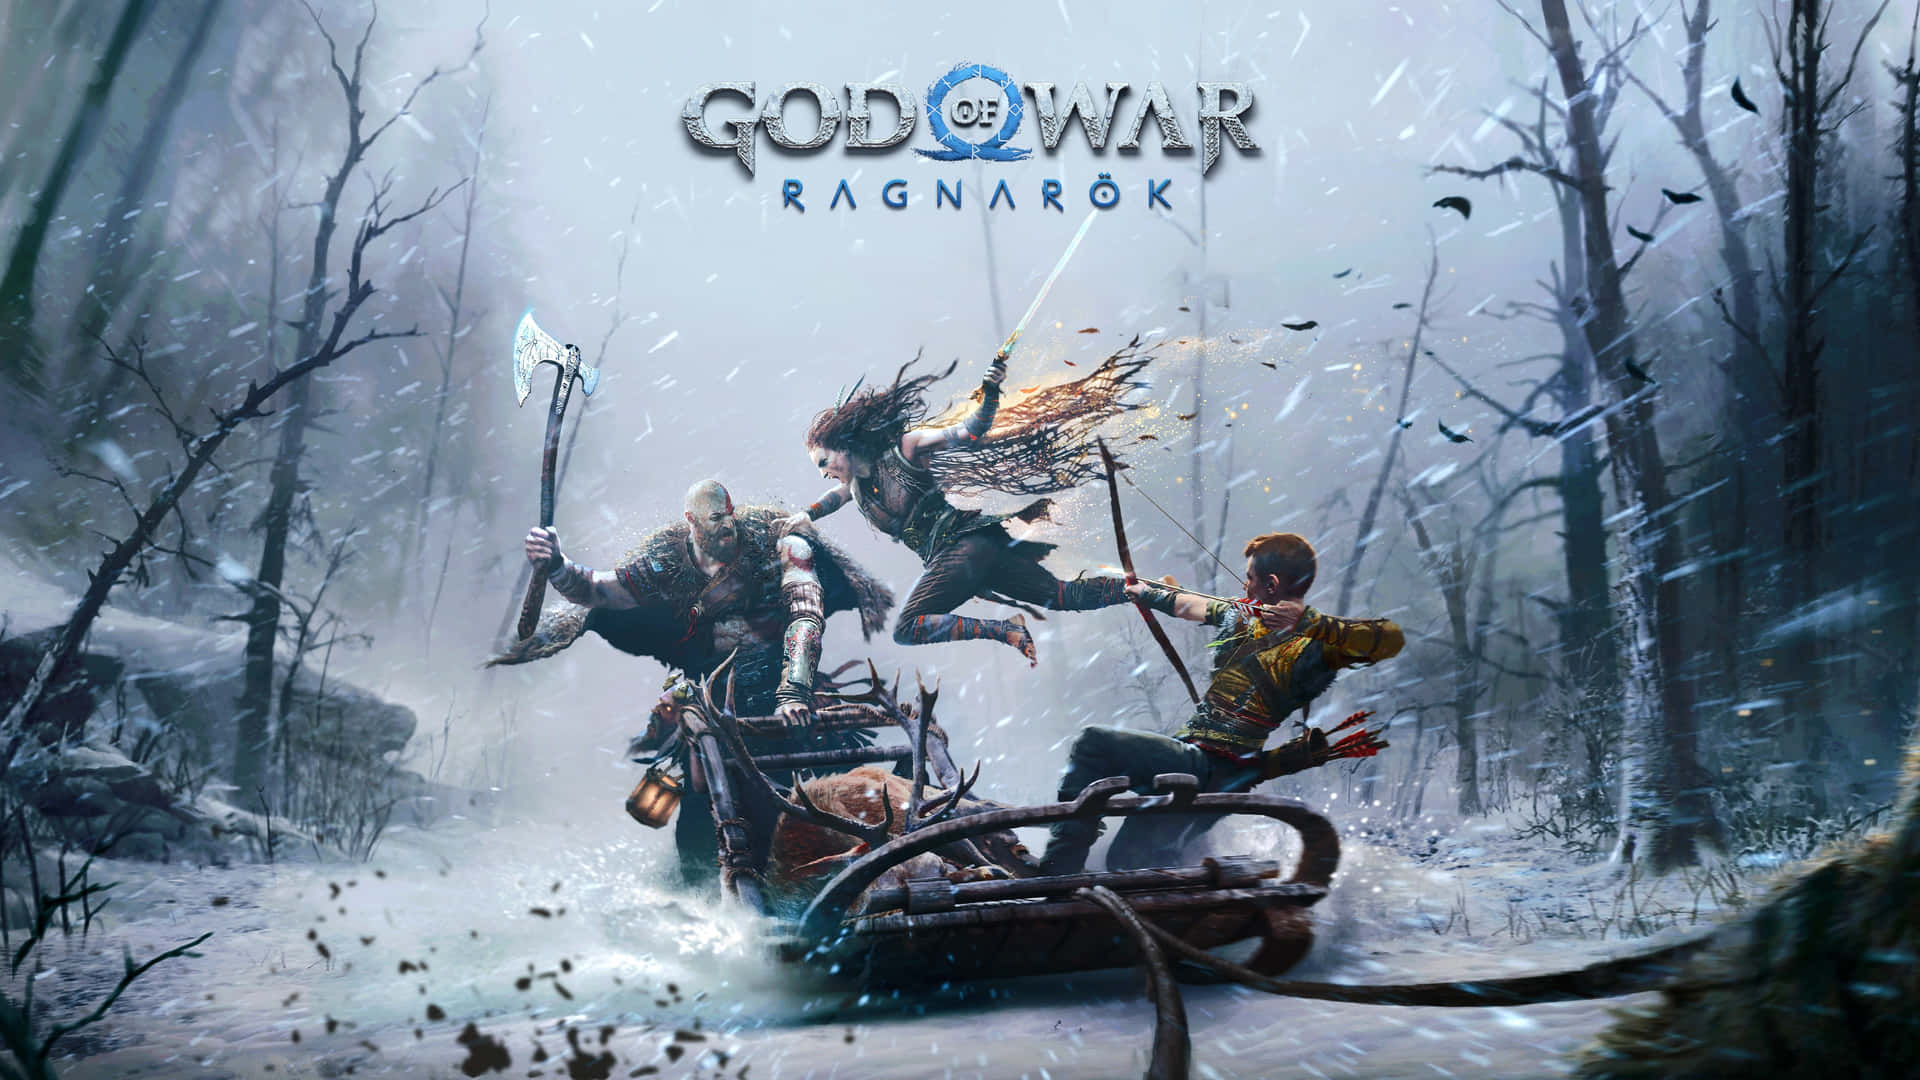 Godof War Ragnarok Epic Battle Wallpaper